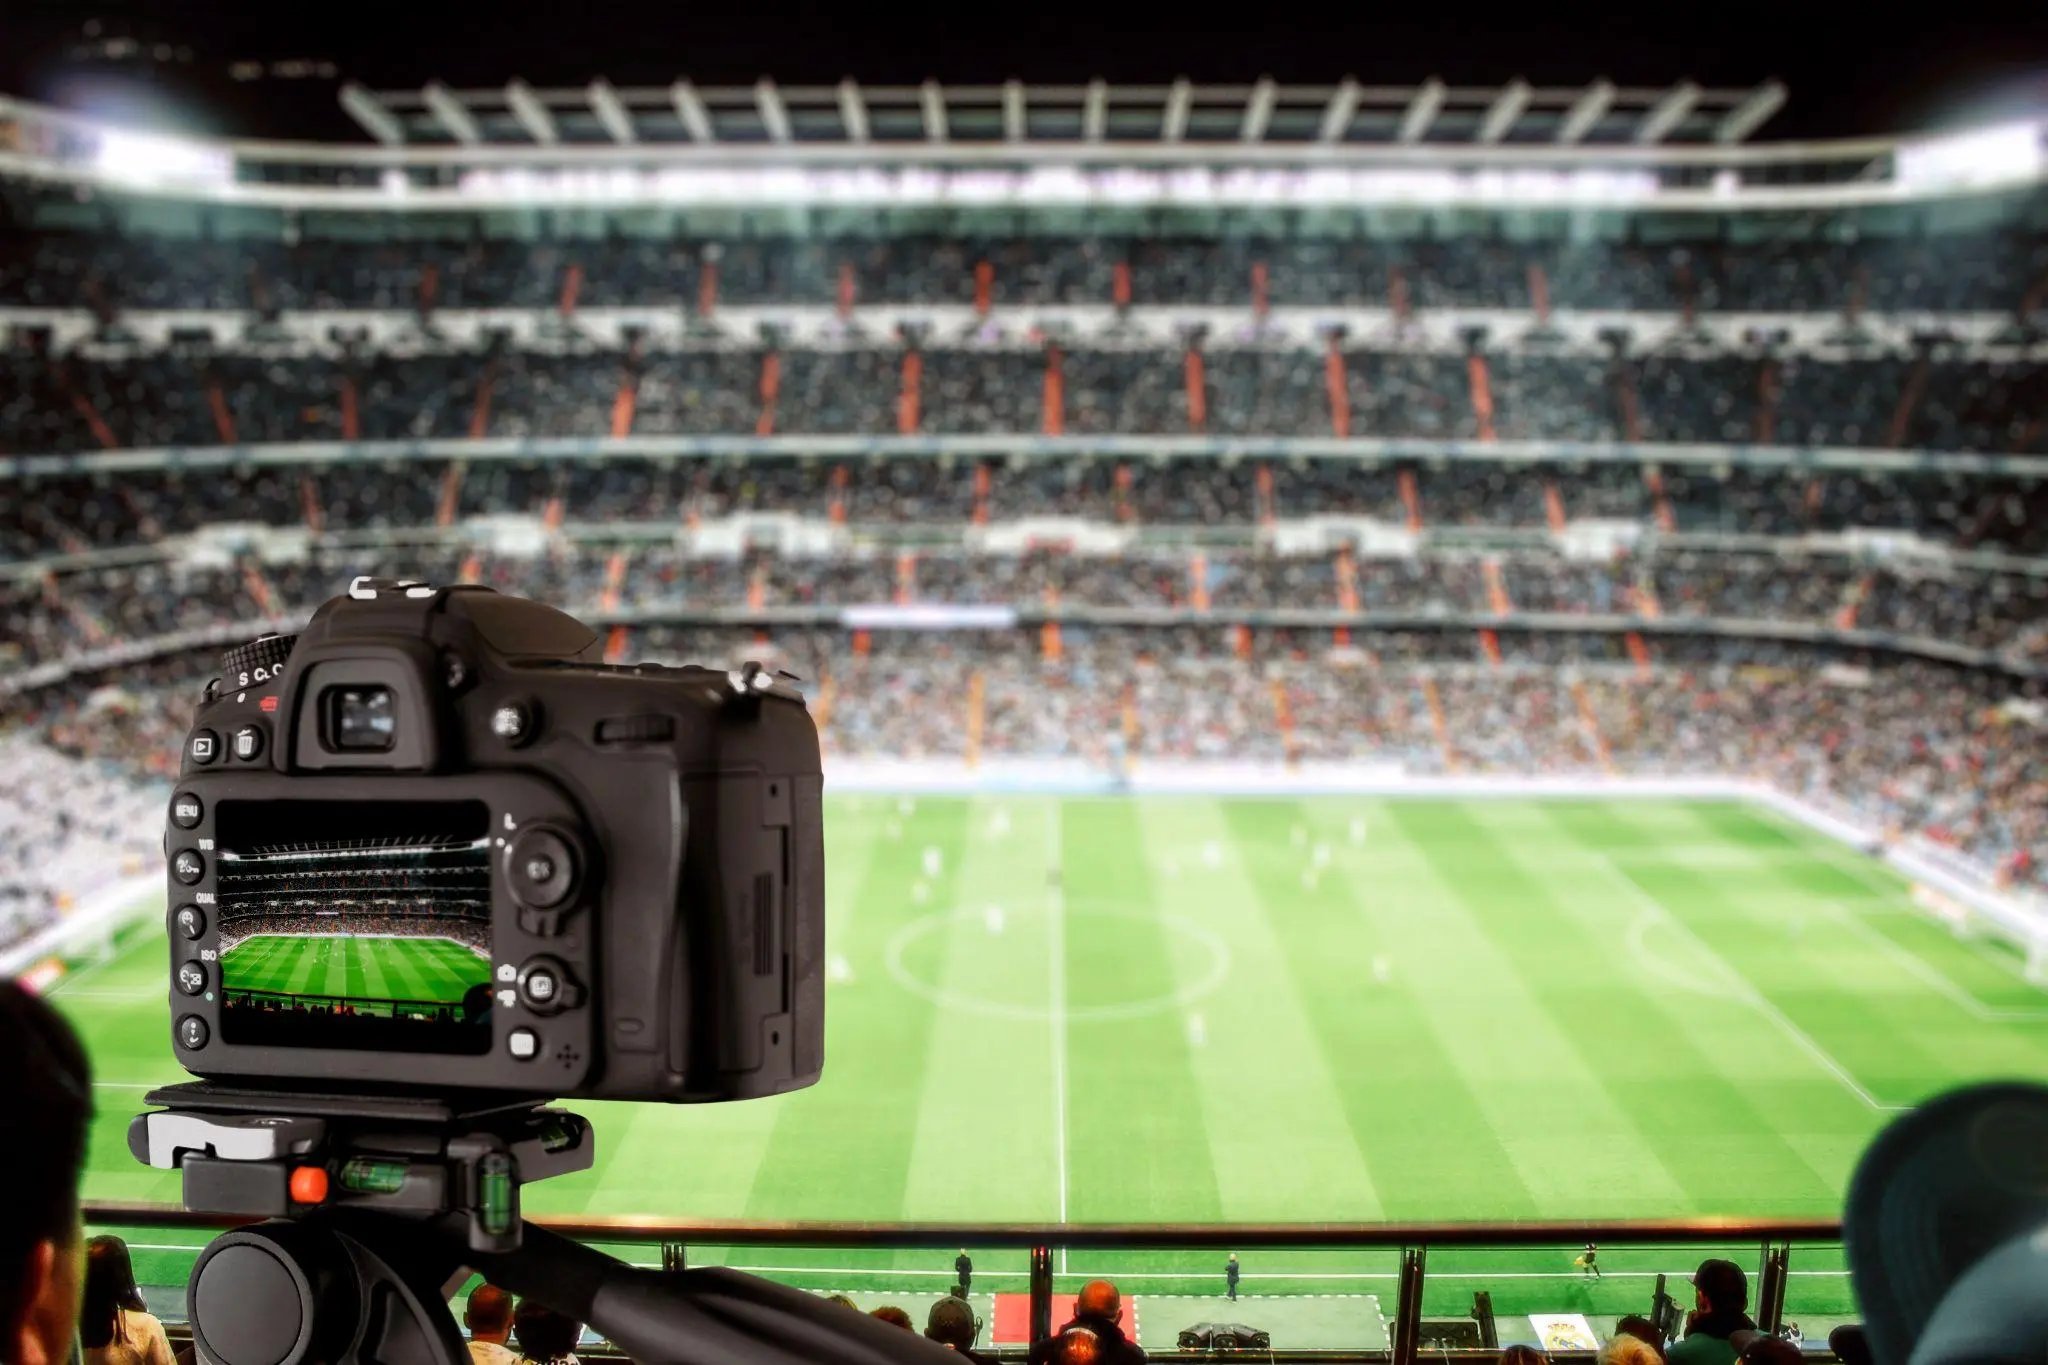 A DSLR camera is filming a football match